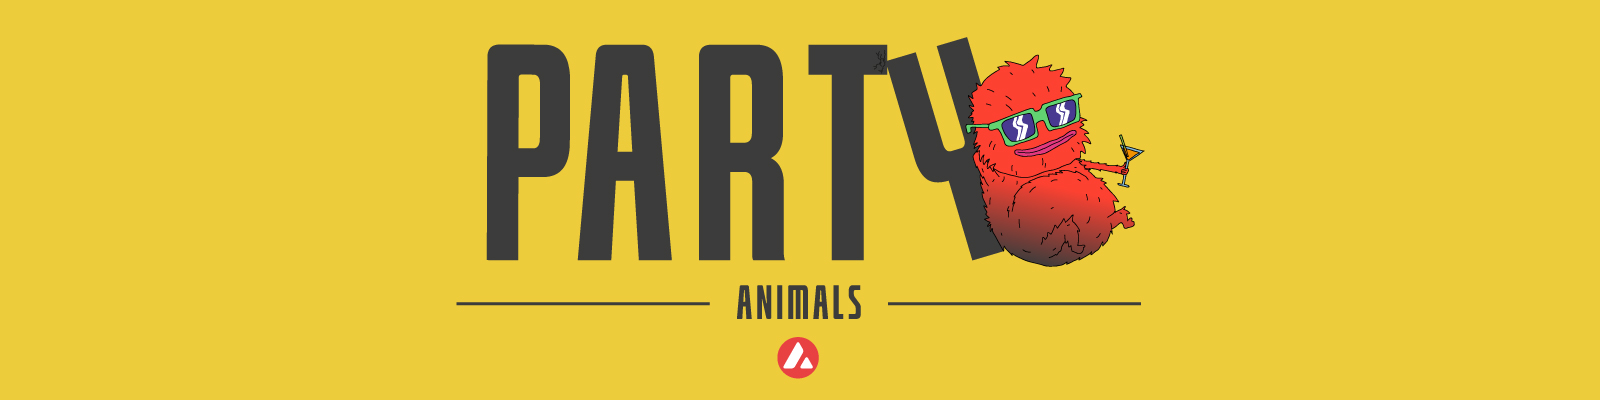 Party Animals Avalanche NFT Avax NFTs Project AvaxNFTs.com